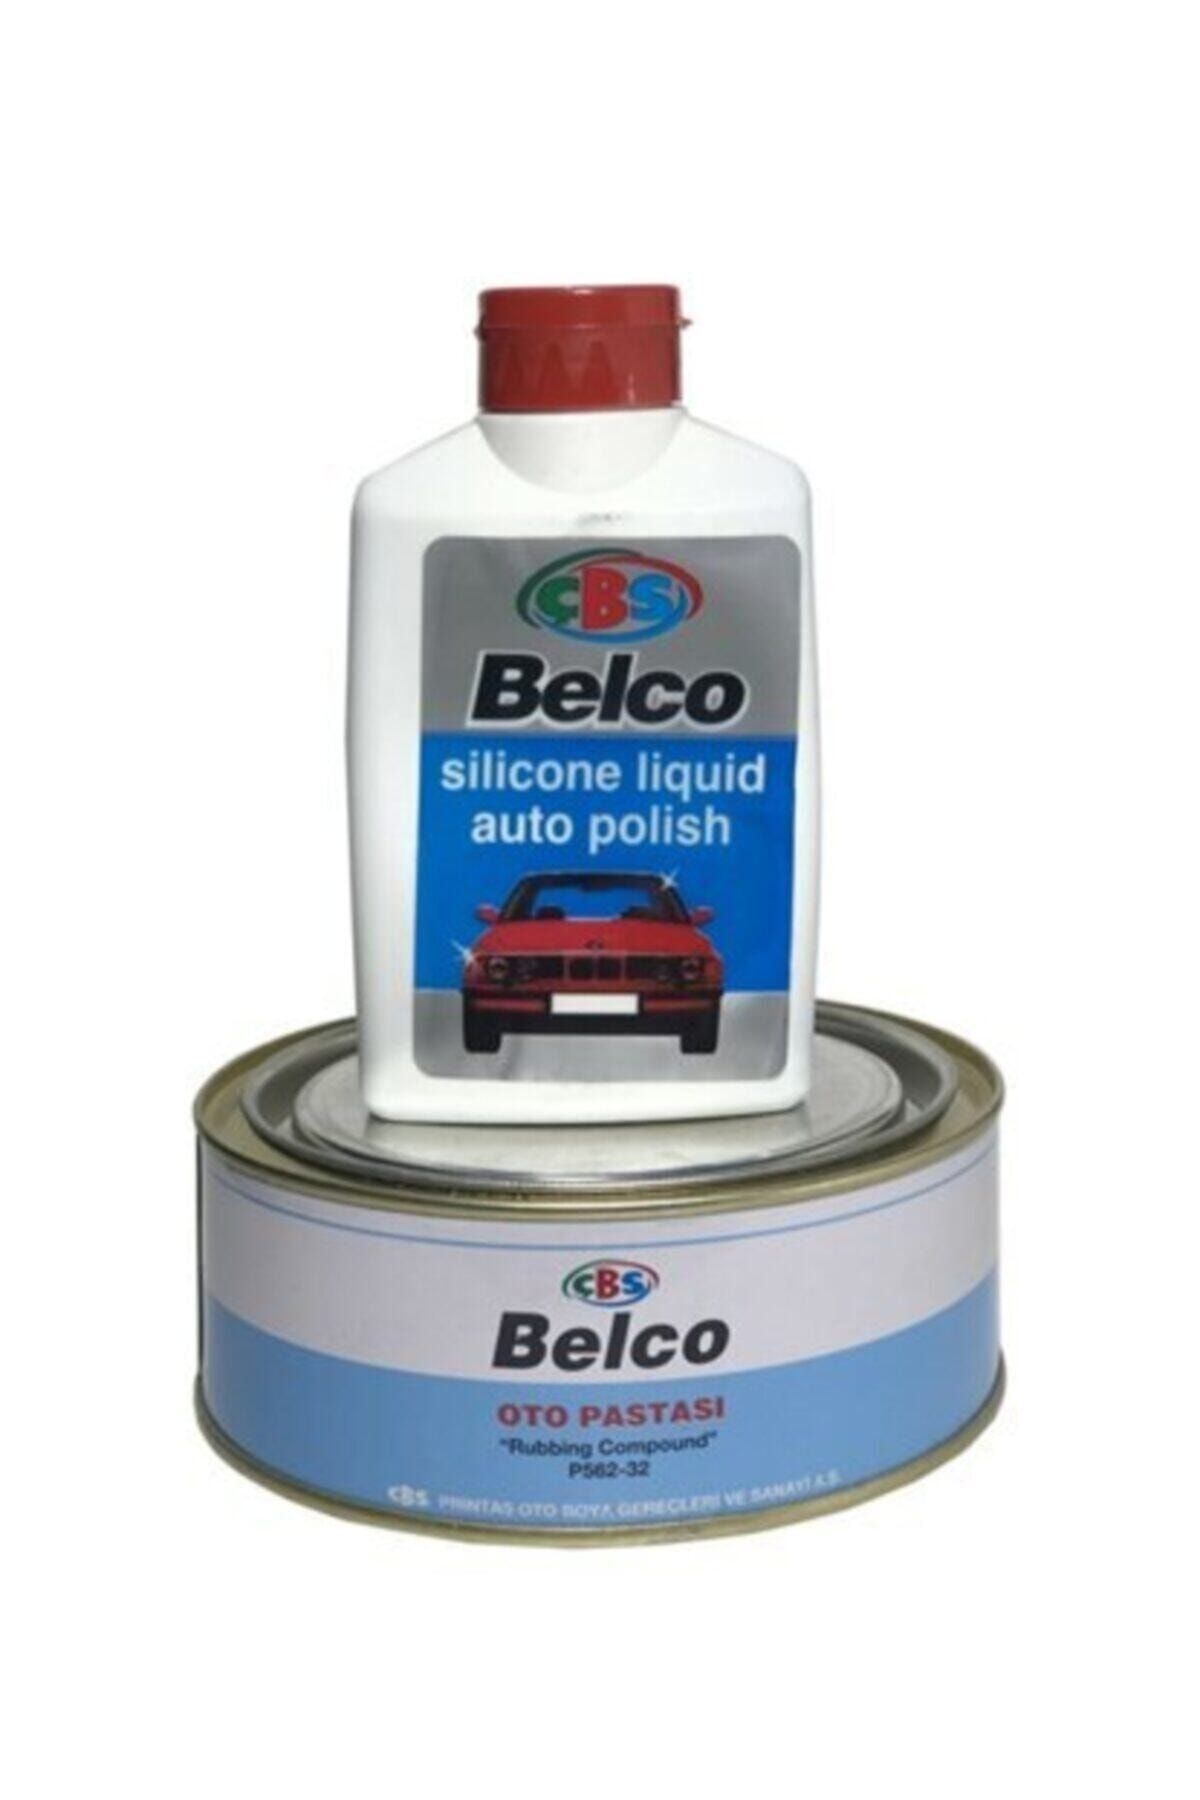 Çbs Belco Silikonlu Cila 250 Ml.+ Belco Pasta 500 Gr.